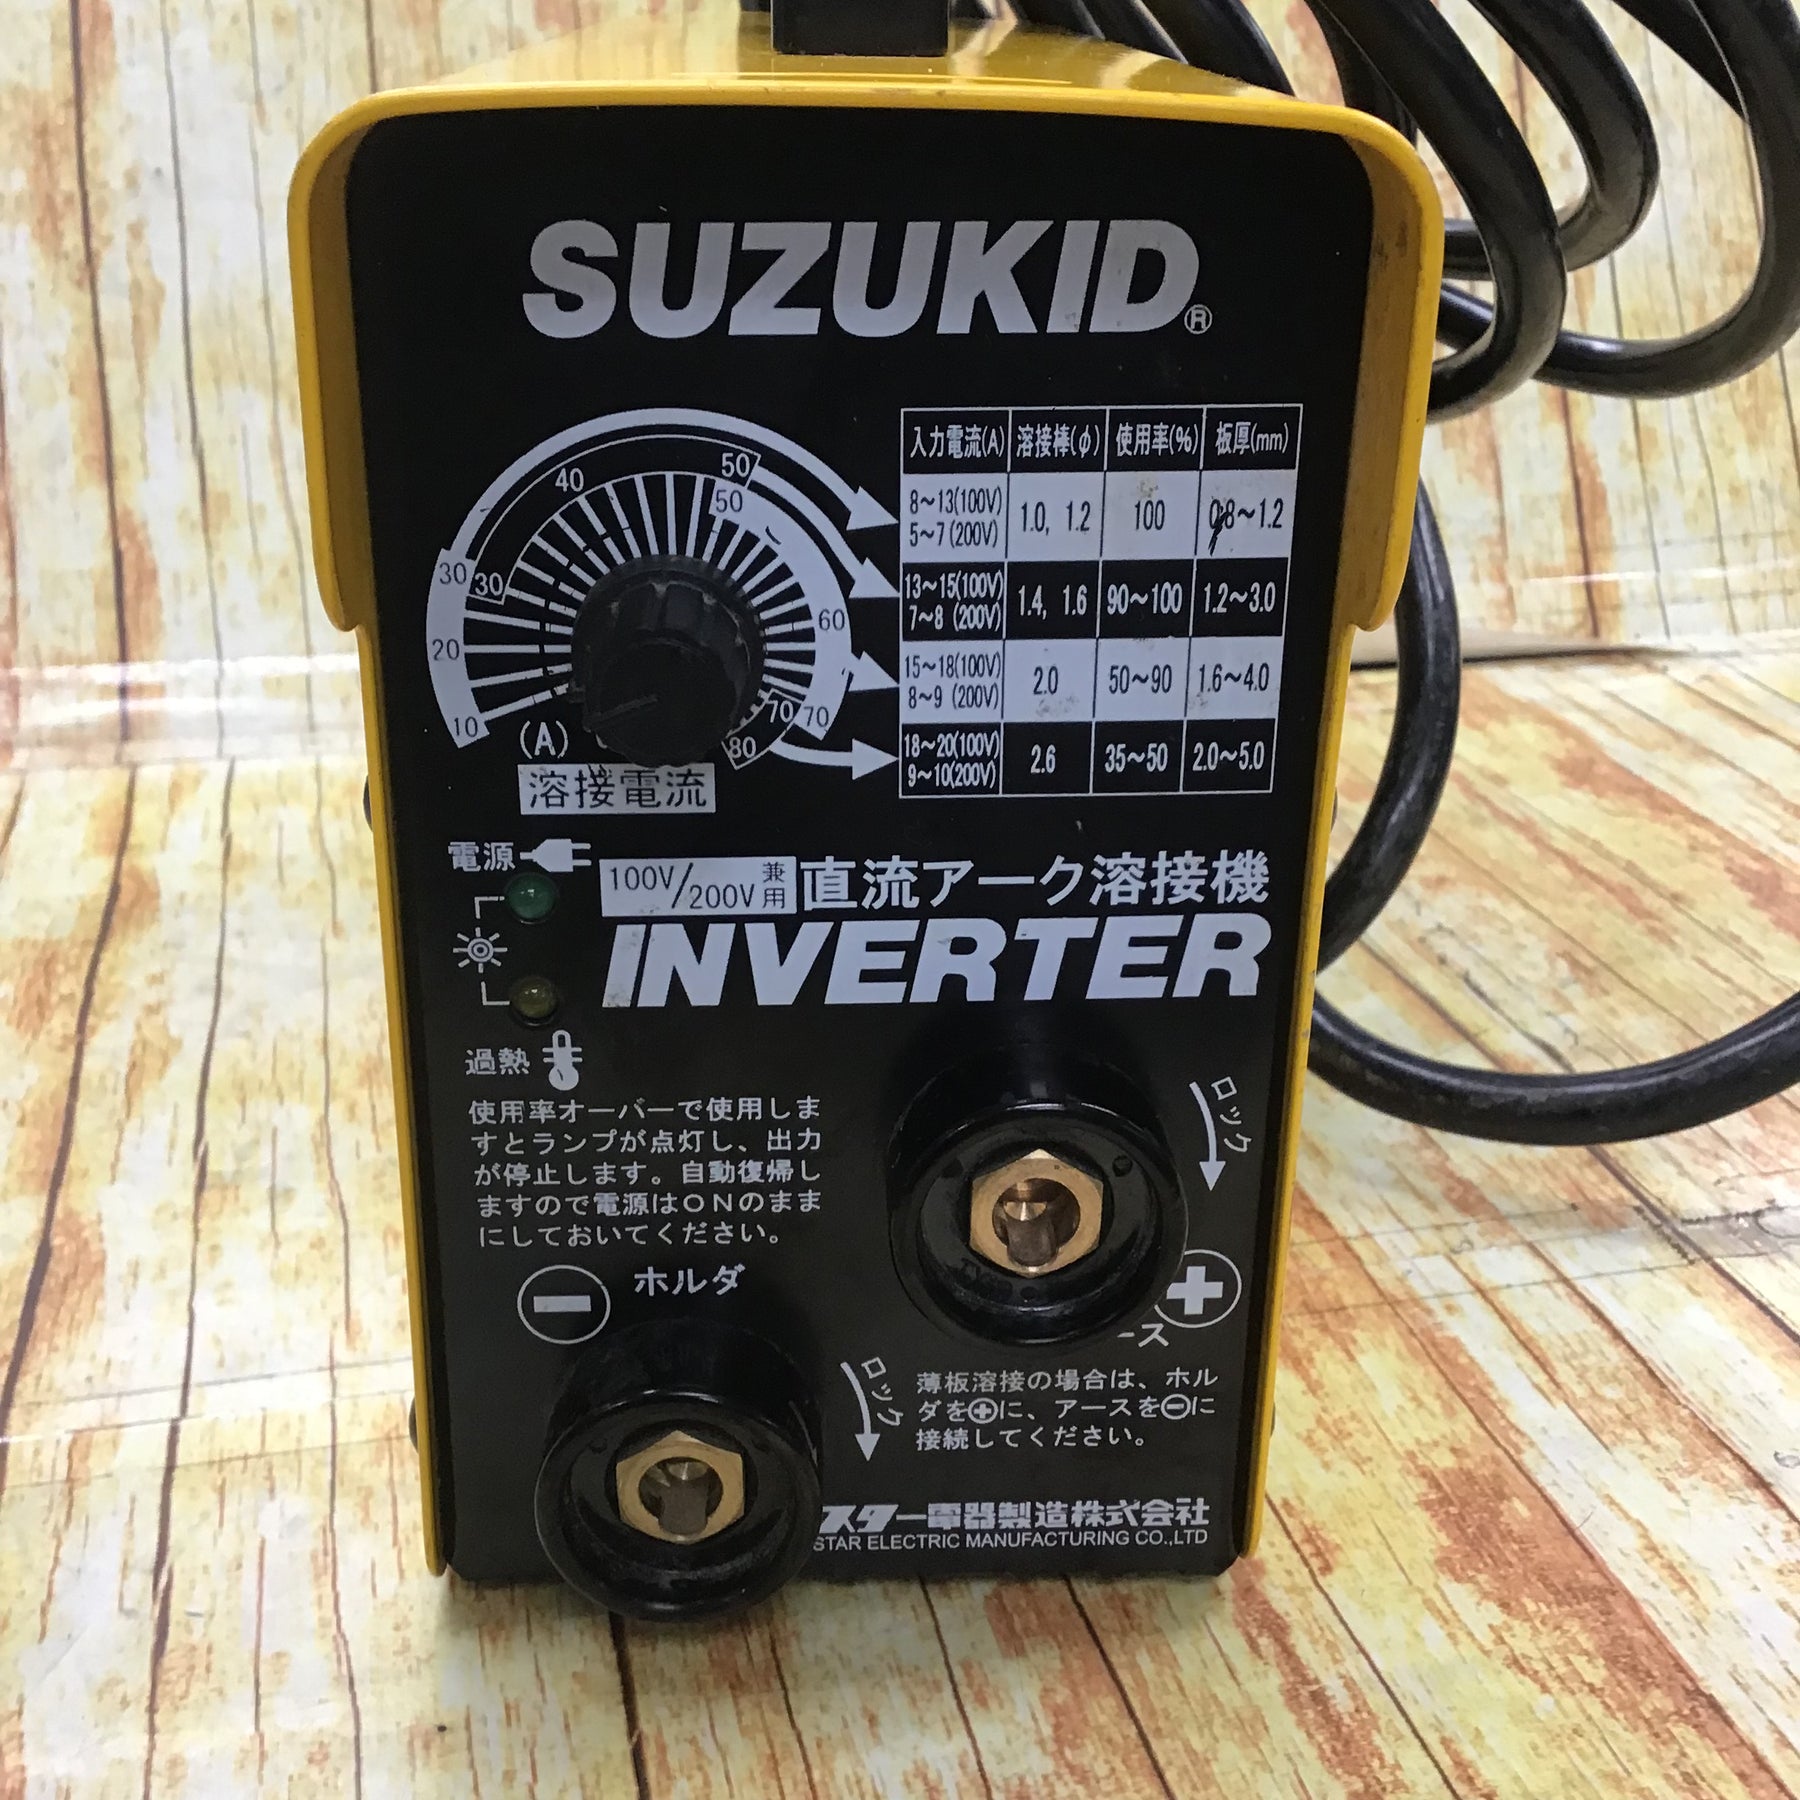 SUZUKID imax80 溶接機 アーク溶接機 - 工具、DIY用品